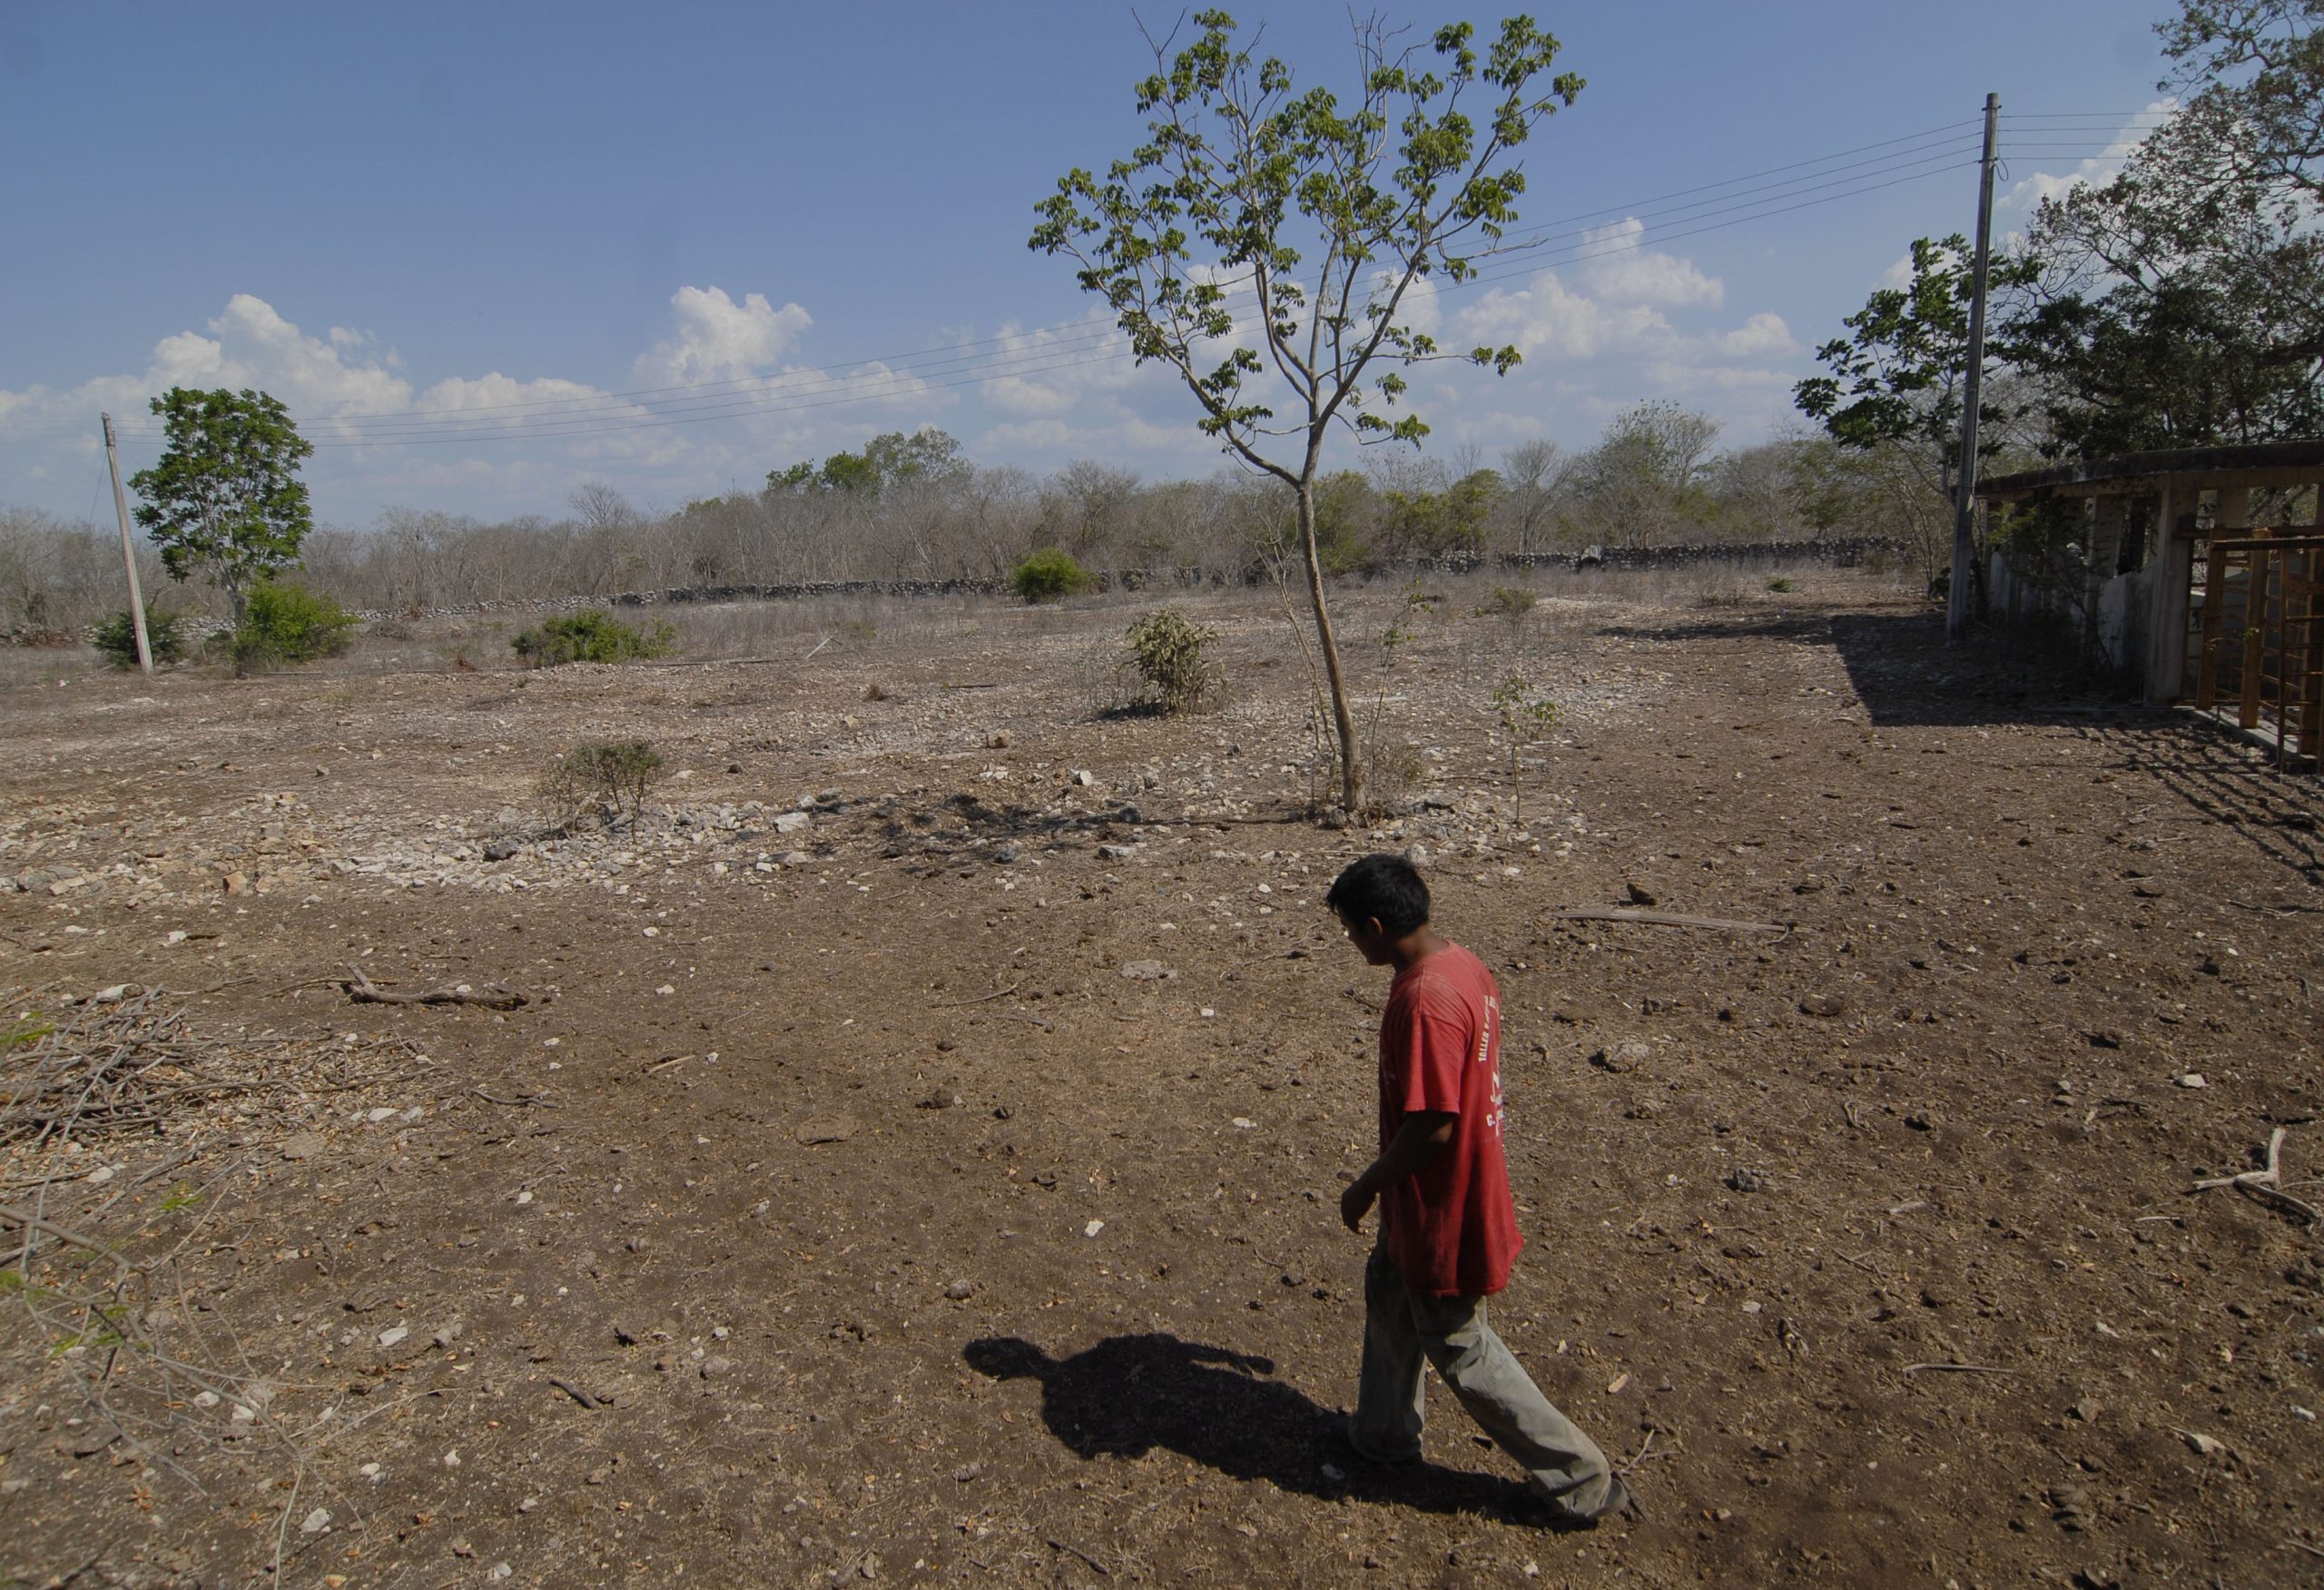 Sufren extrema sequía municipios yucatecos: 3 de cada 4 son afectados por la falta de lluvia.